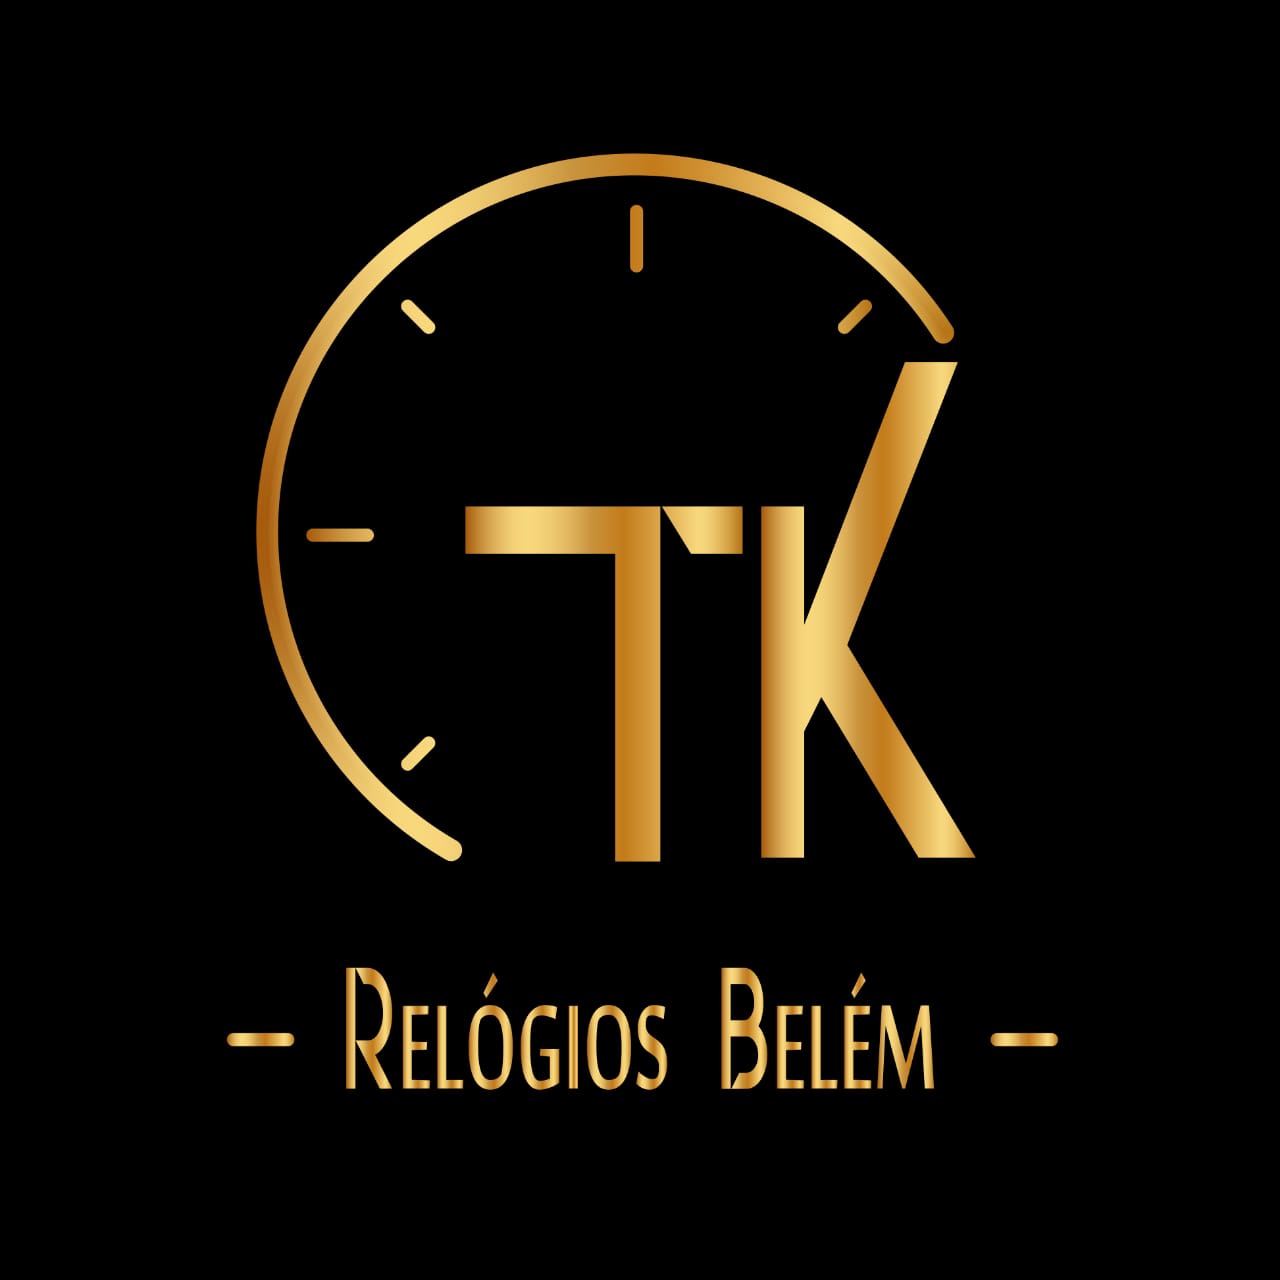 TK Relógios Belém